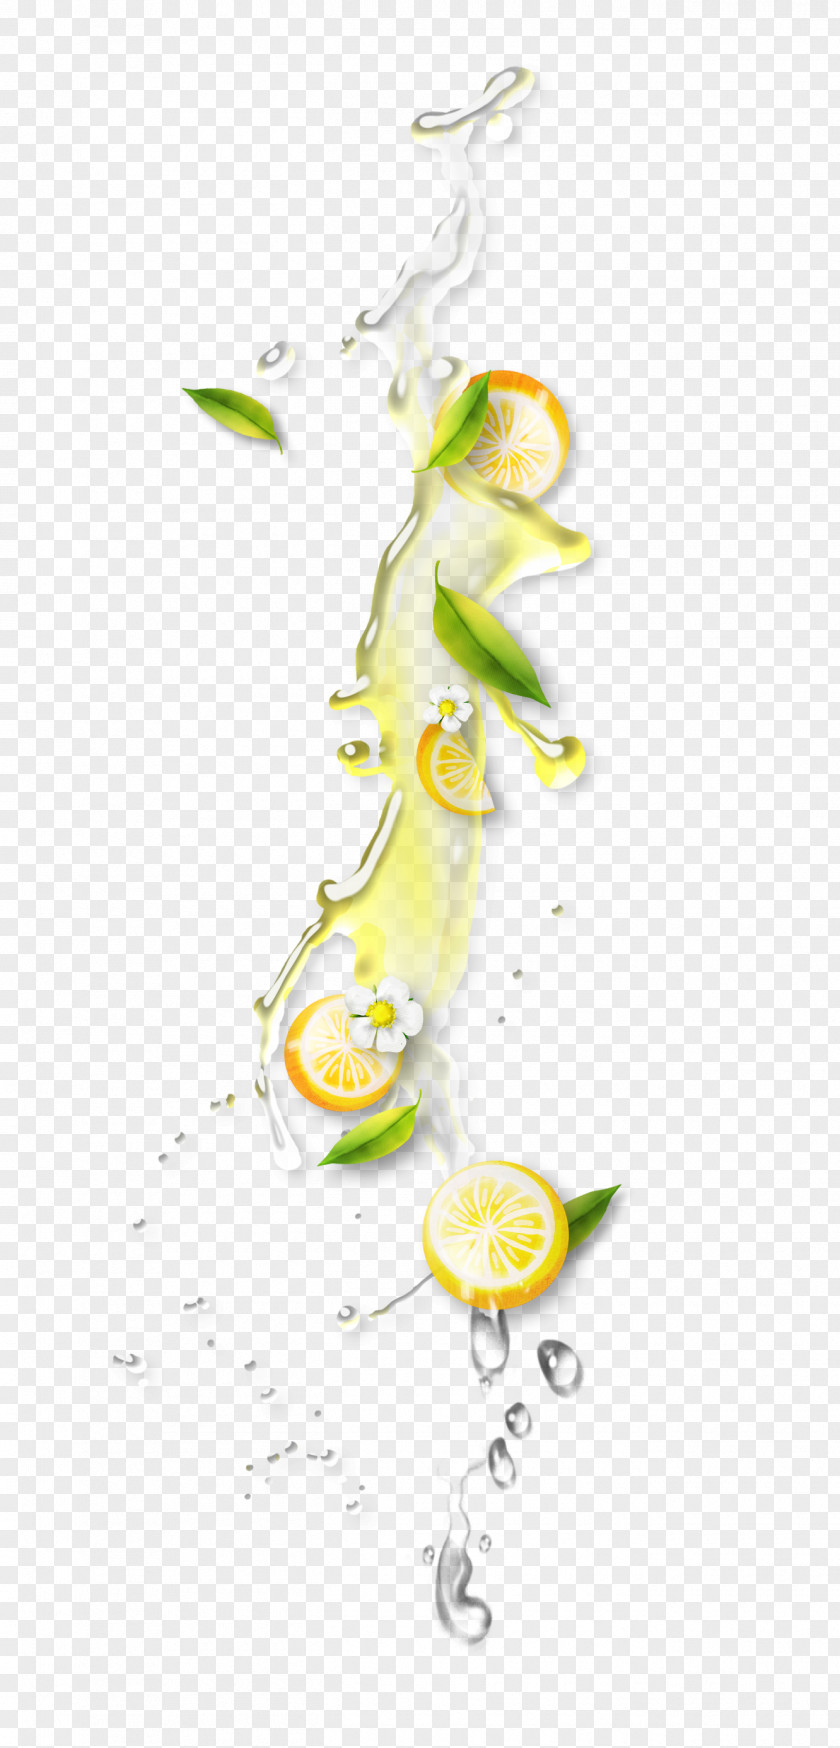 Splash Of Orange Juice PNG